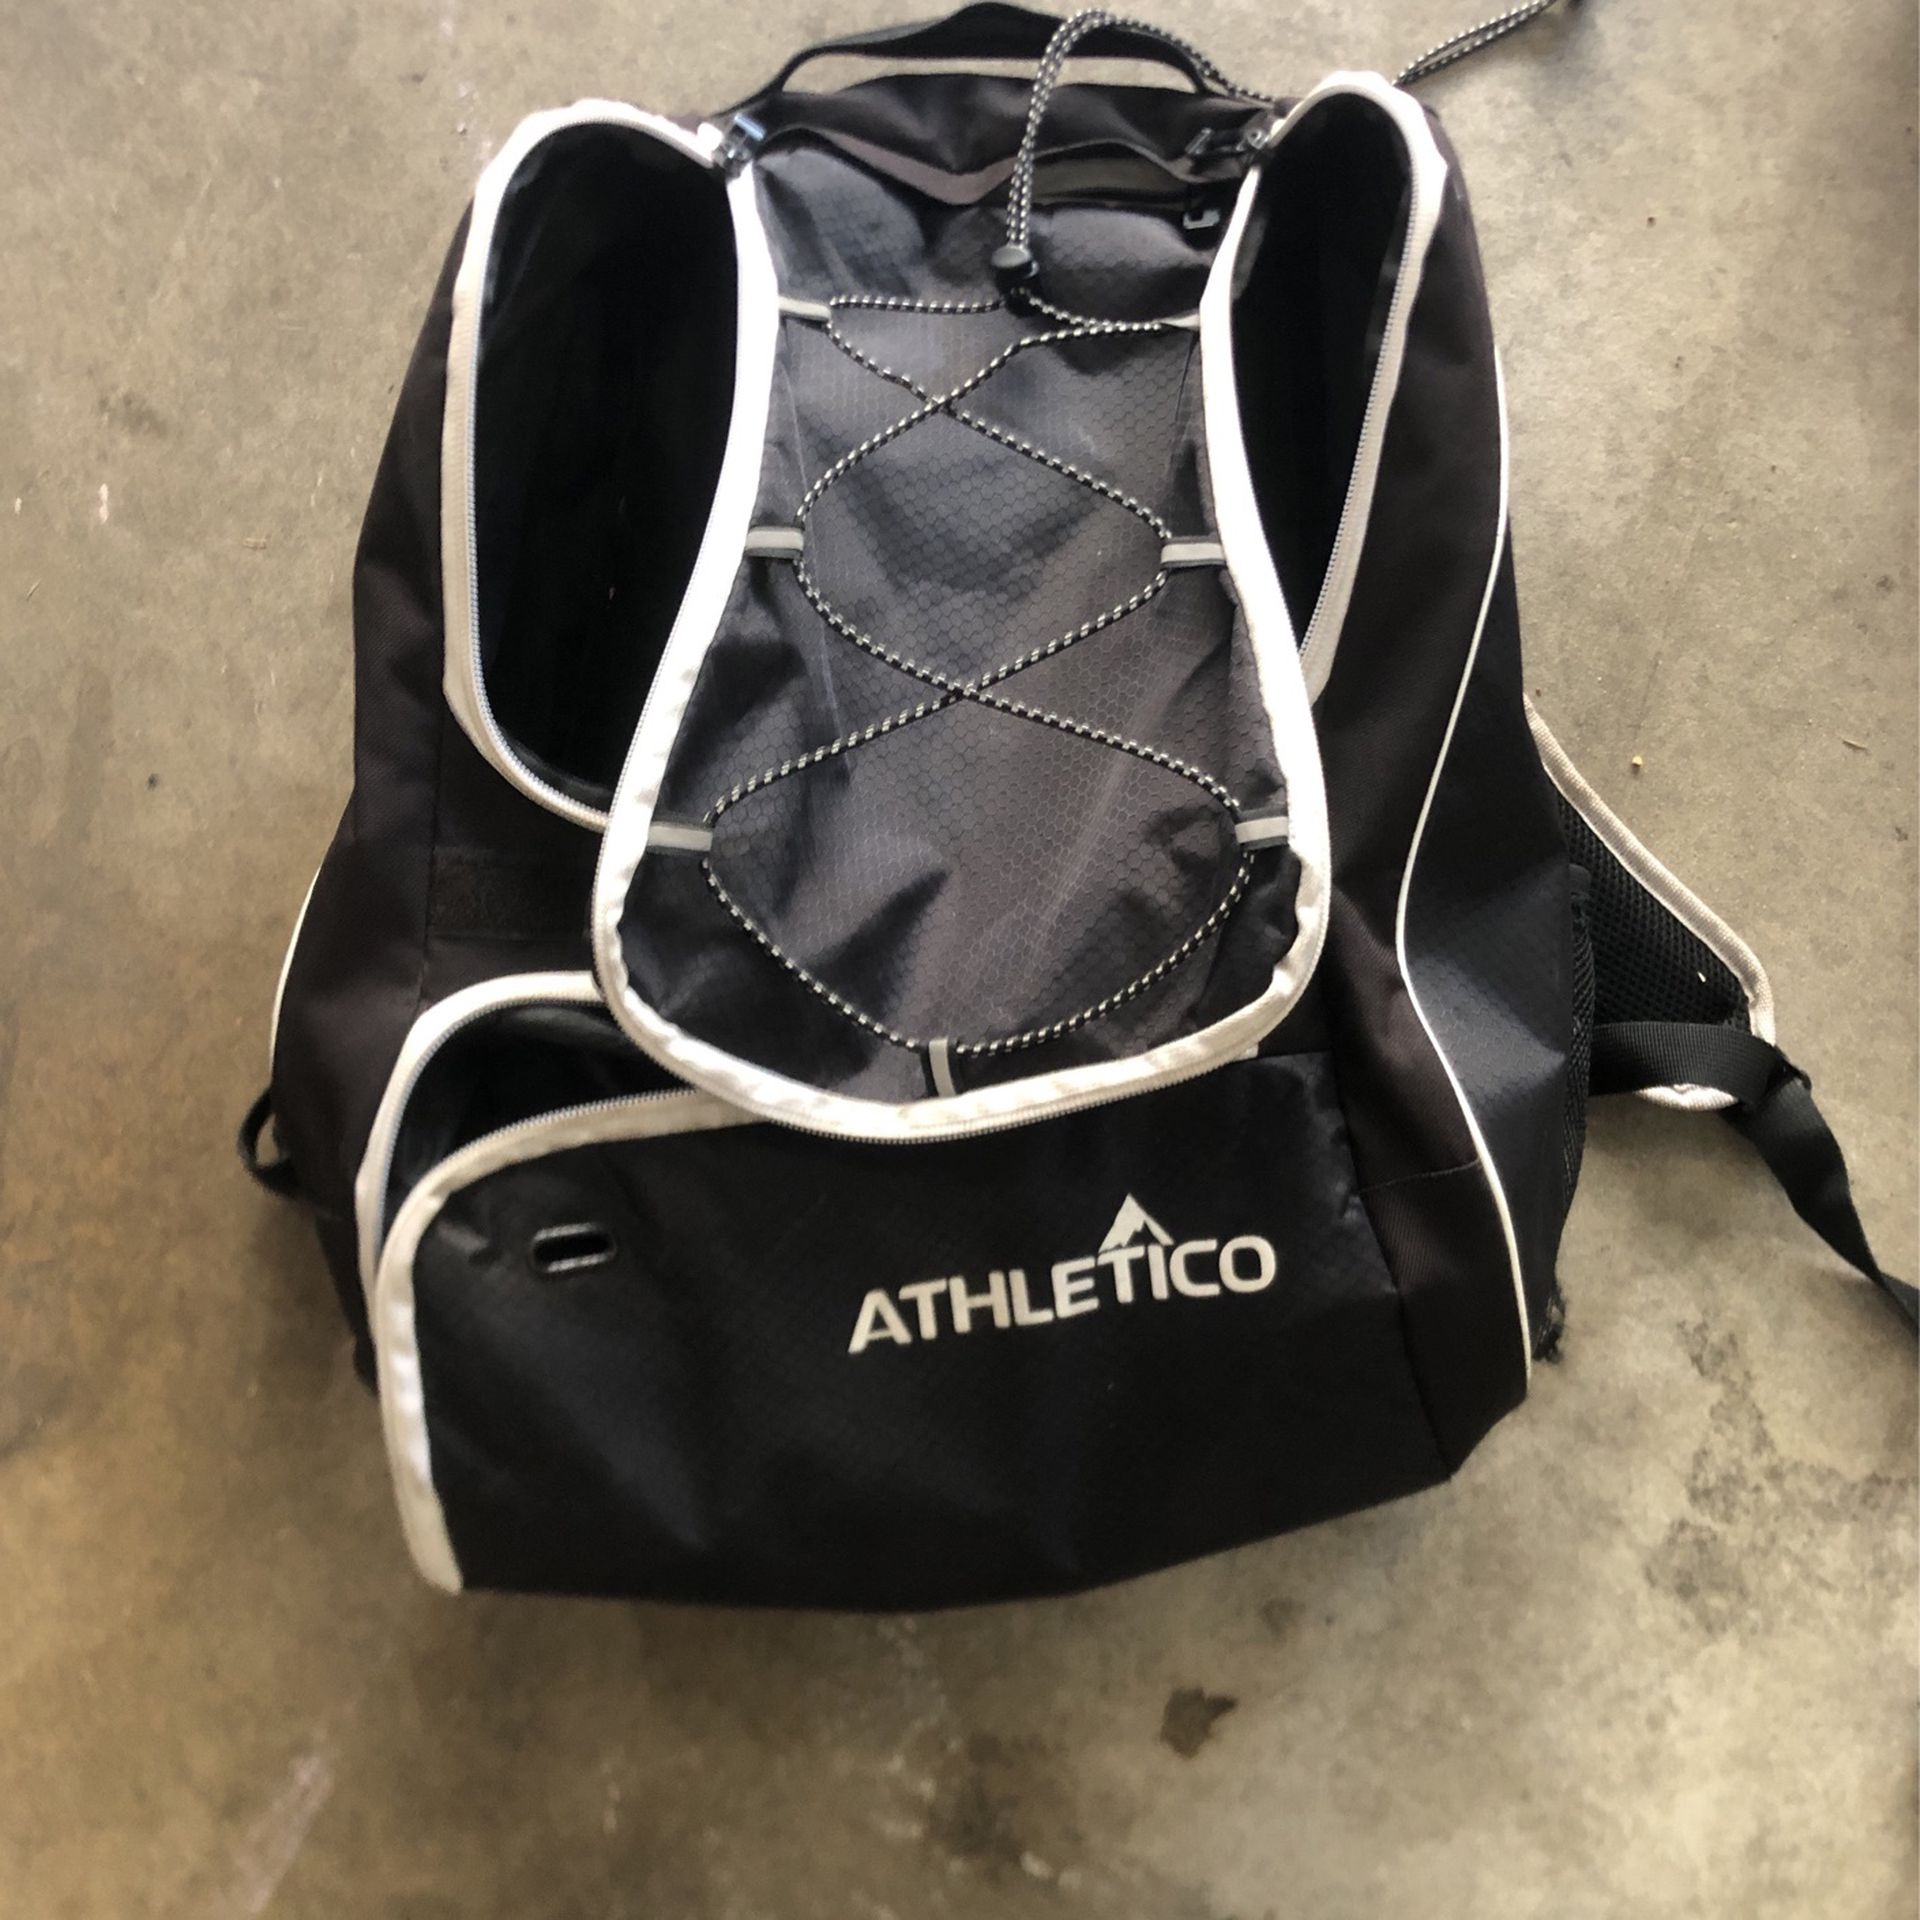 Baseball Bag (Athletico)